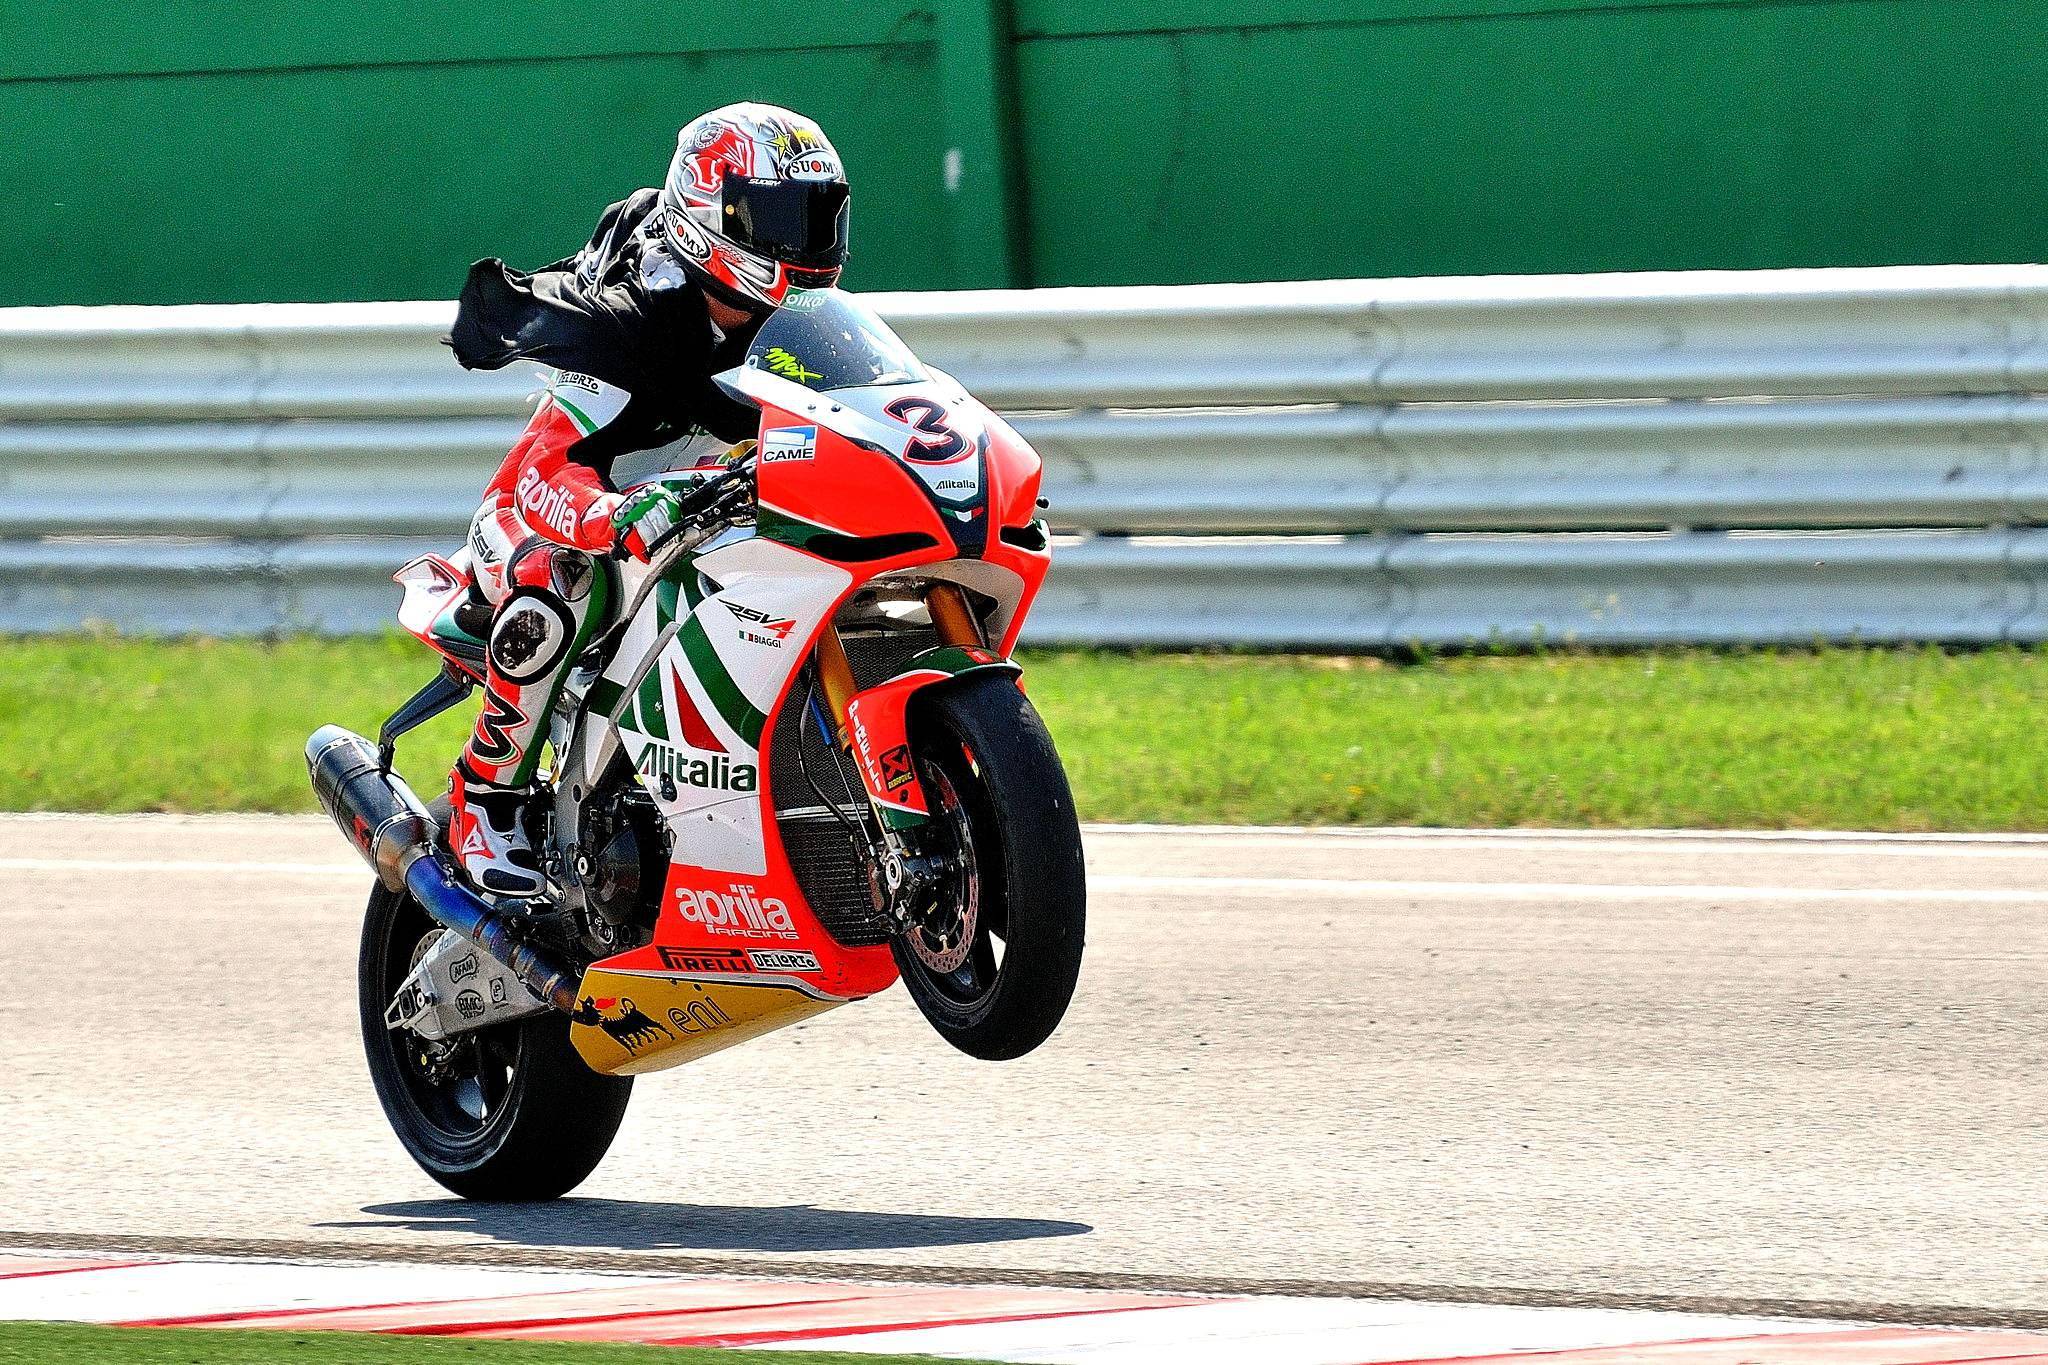 biaggi)夺得了 2010 年 worldsbk 世界超级摩托车锦标赛的世界冠军